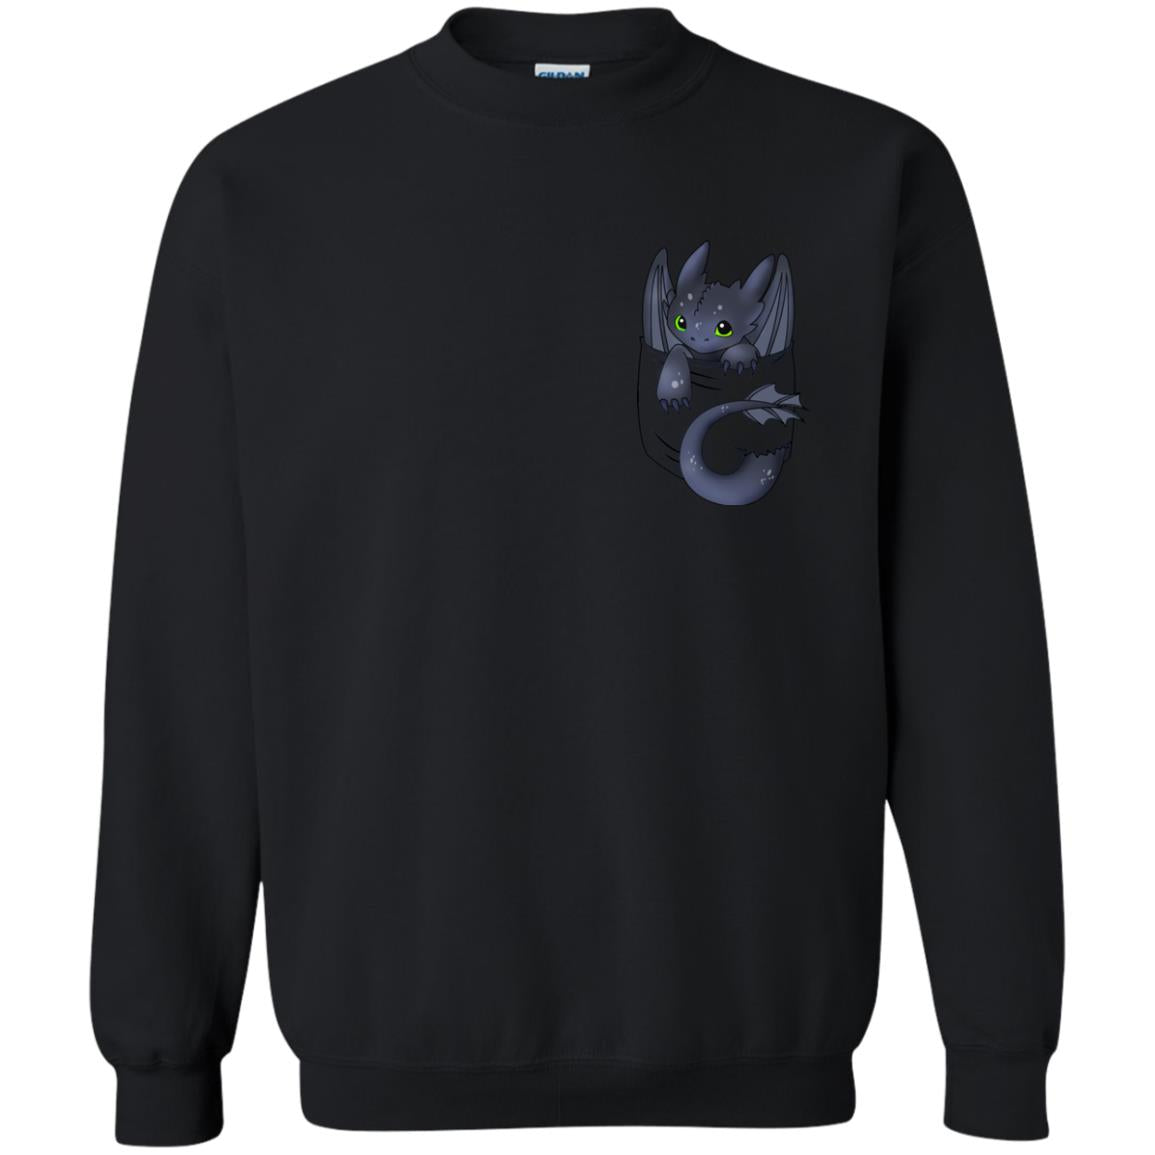 Dragon In Pocket ShirtG180 Gildan Crewneck Pullover Sweatshirt 8 oz.